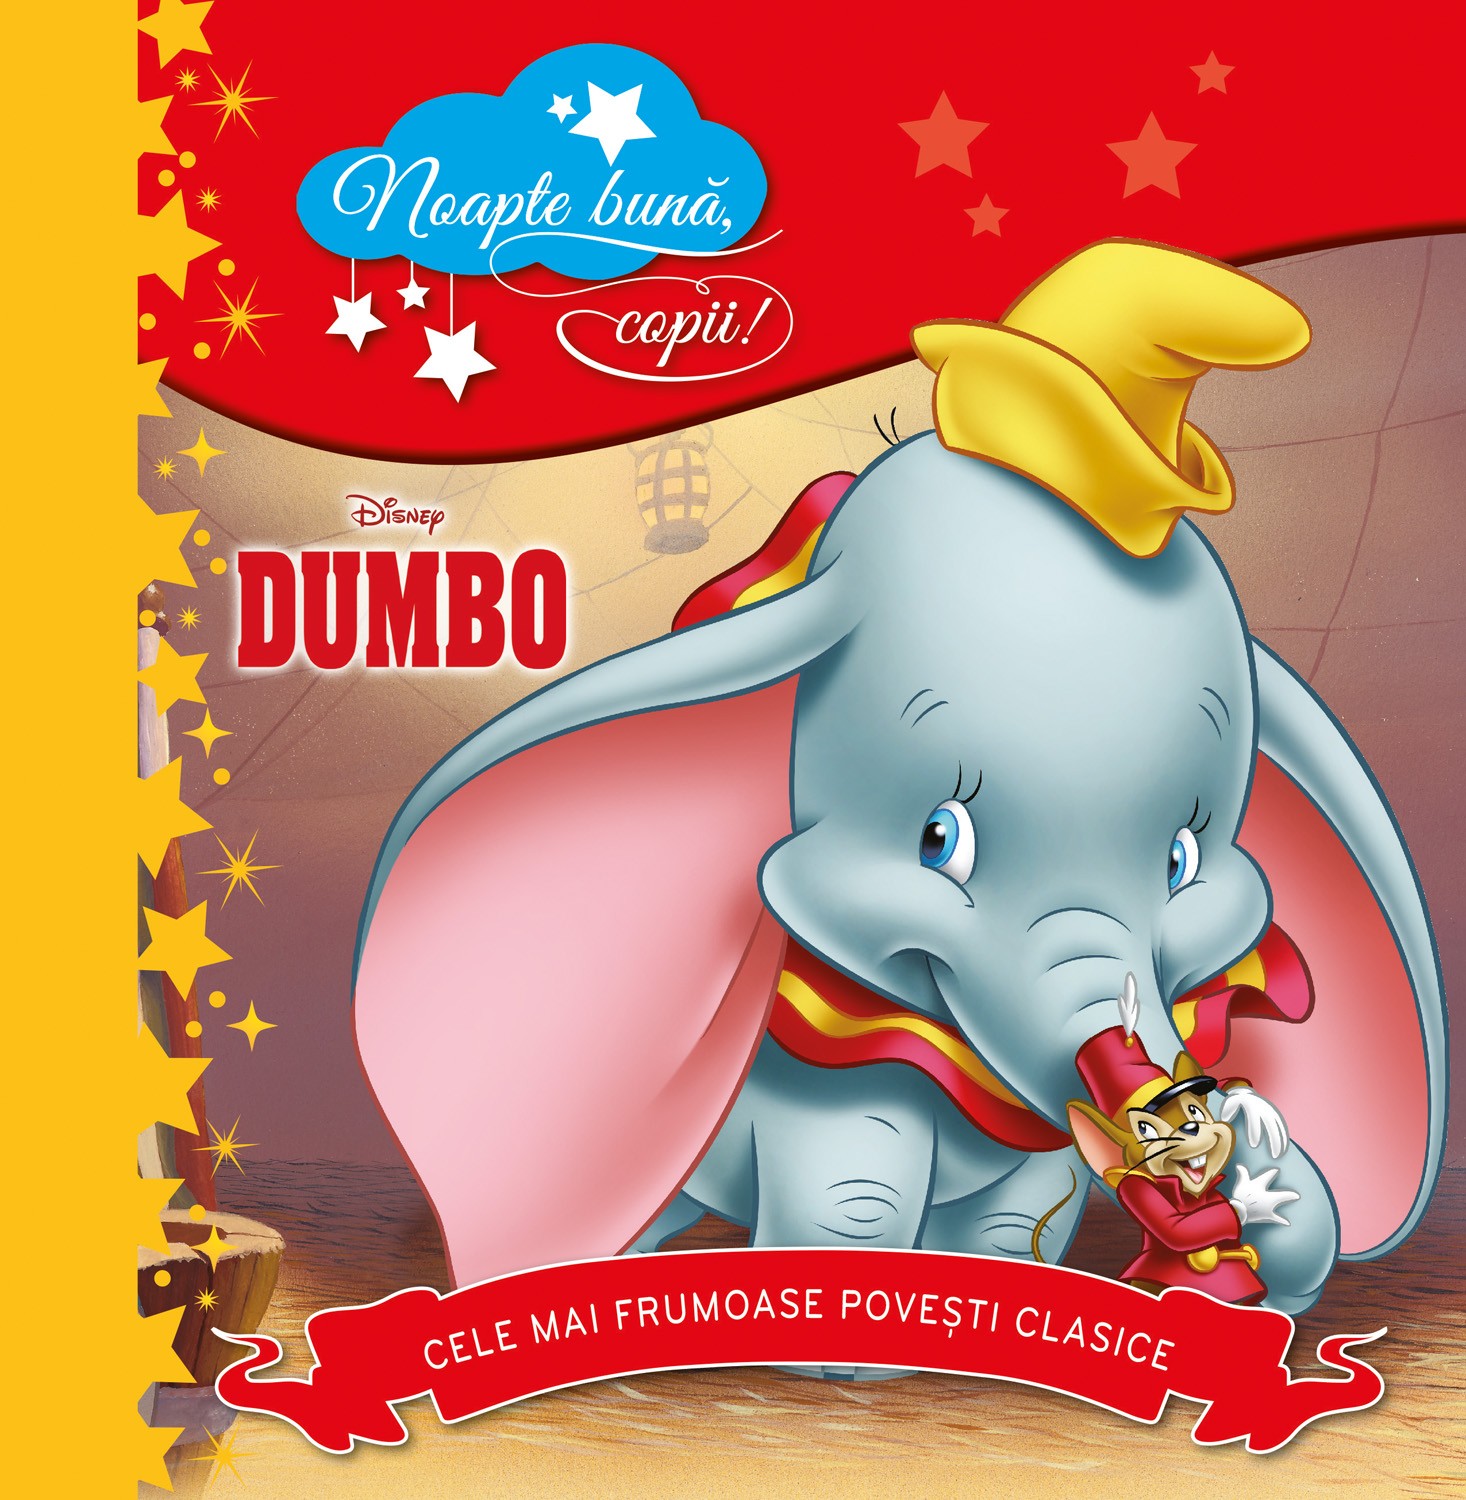 Disney - Dumbo - Noapte buna, copii!